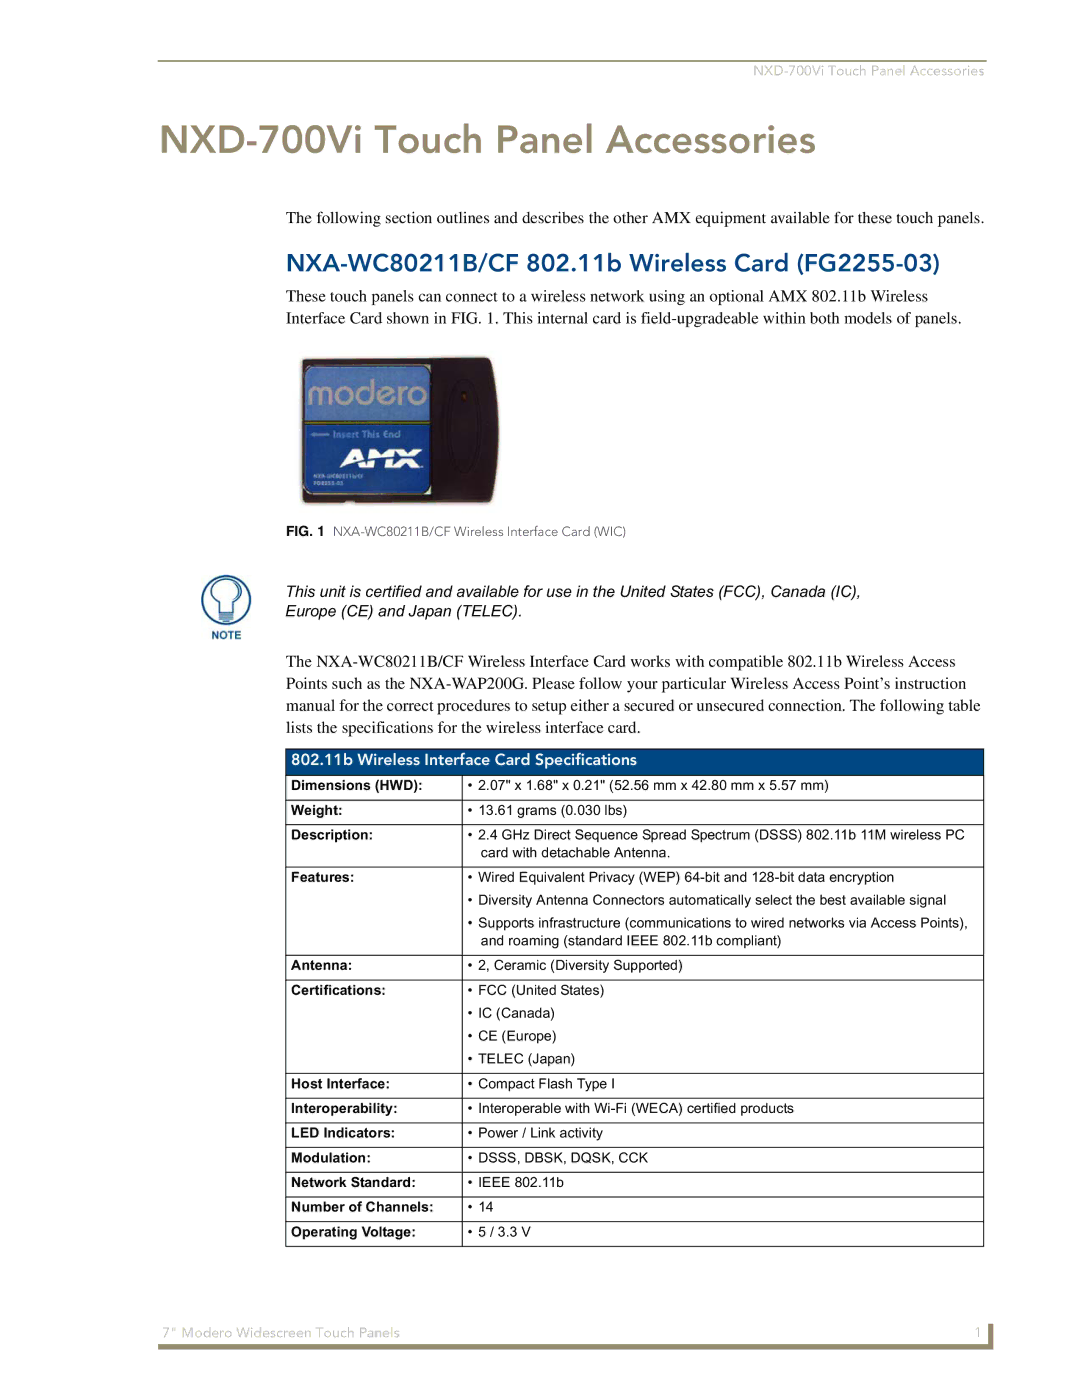 AMX manual NXD-700Vi Touch Panel Accessories, NXA-WC80211B/CF 802.11b Wireless Card FG2255-03 